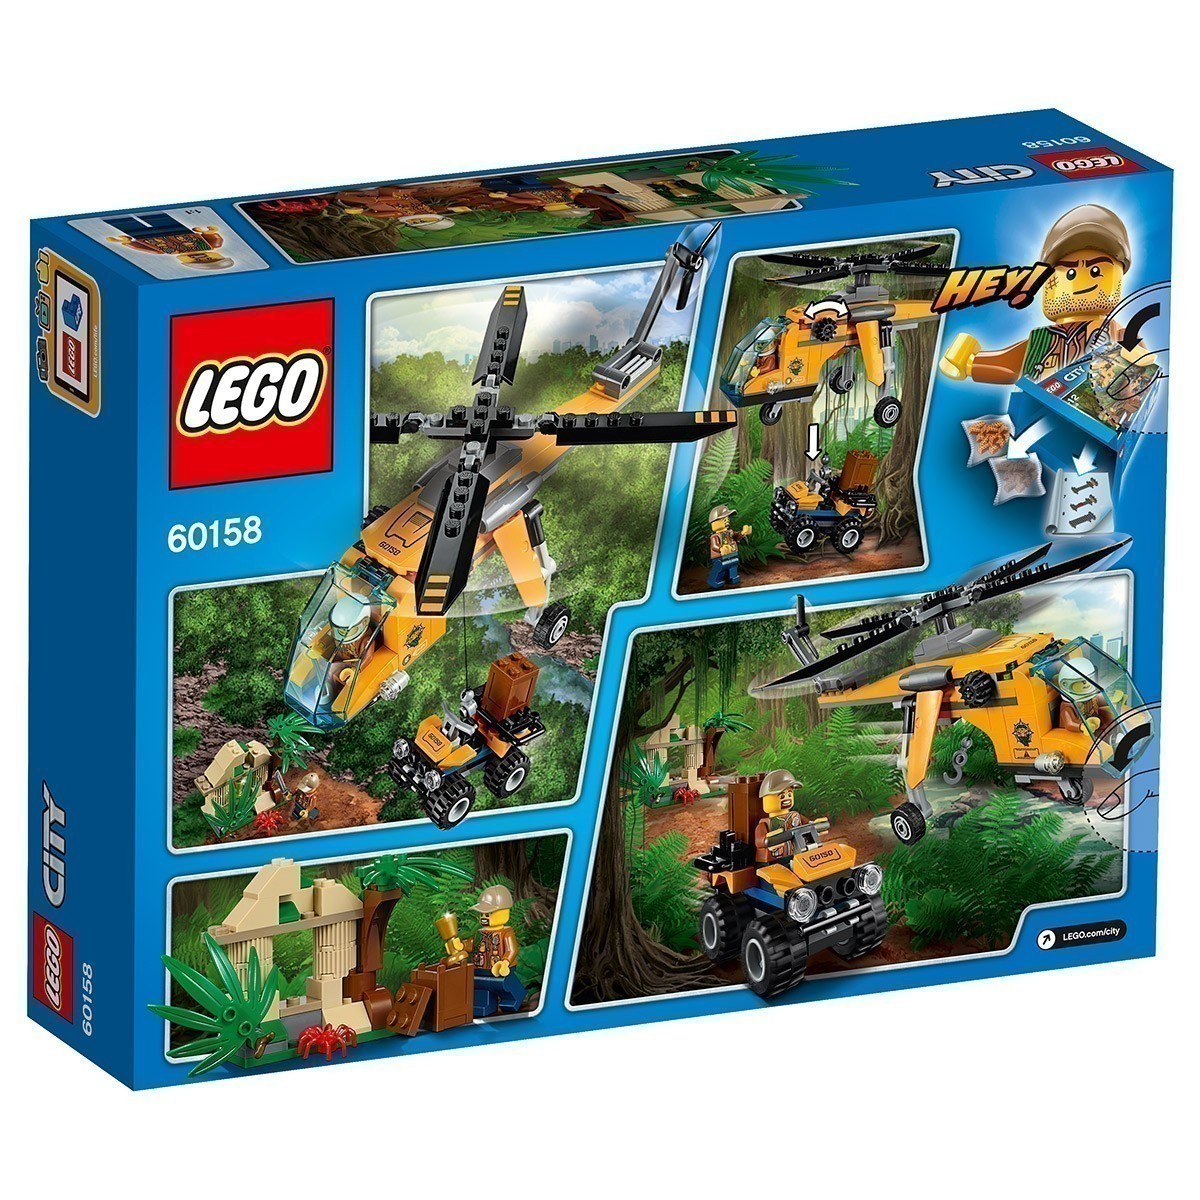 LEGO® City - 60158 Jungle Cargo Helicopter